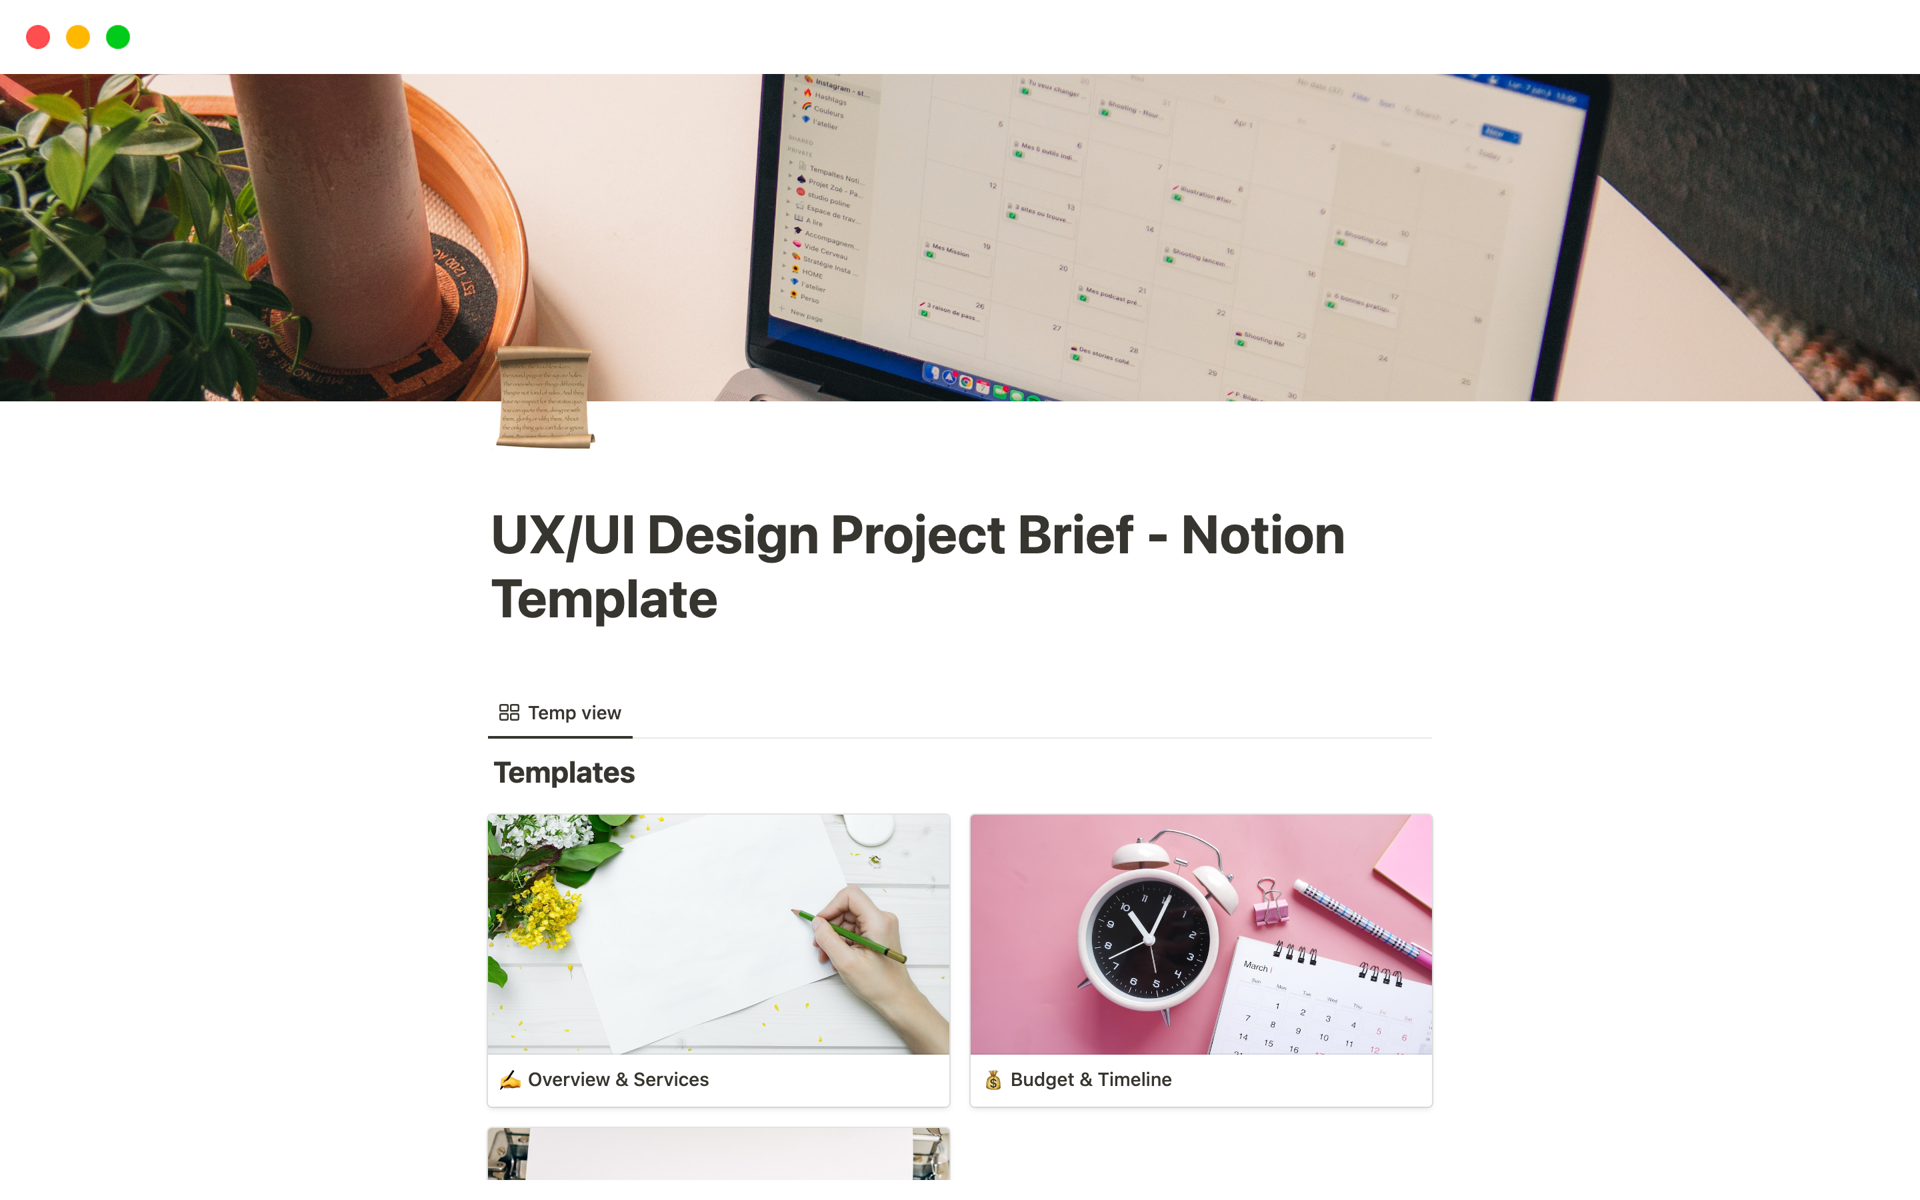 Aperçu du modèle de UX/UI Design Project Brief